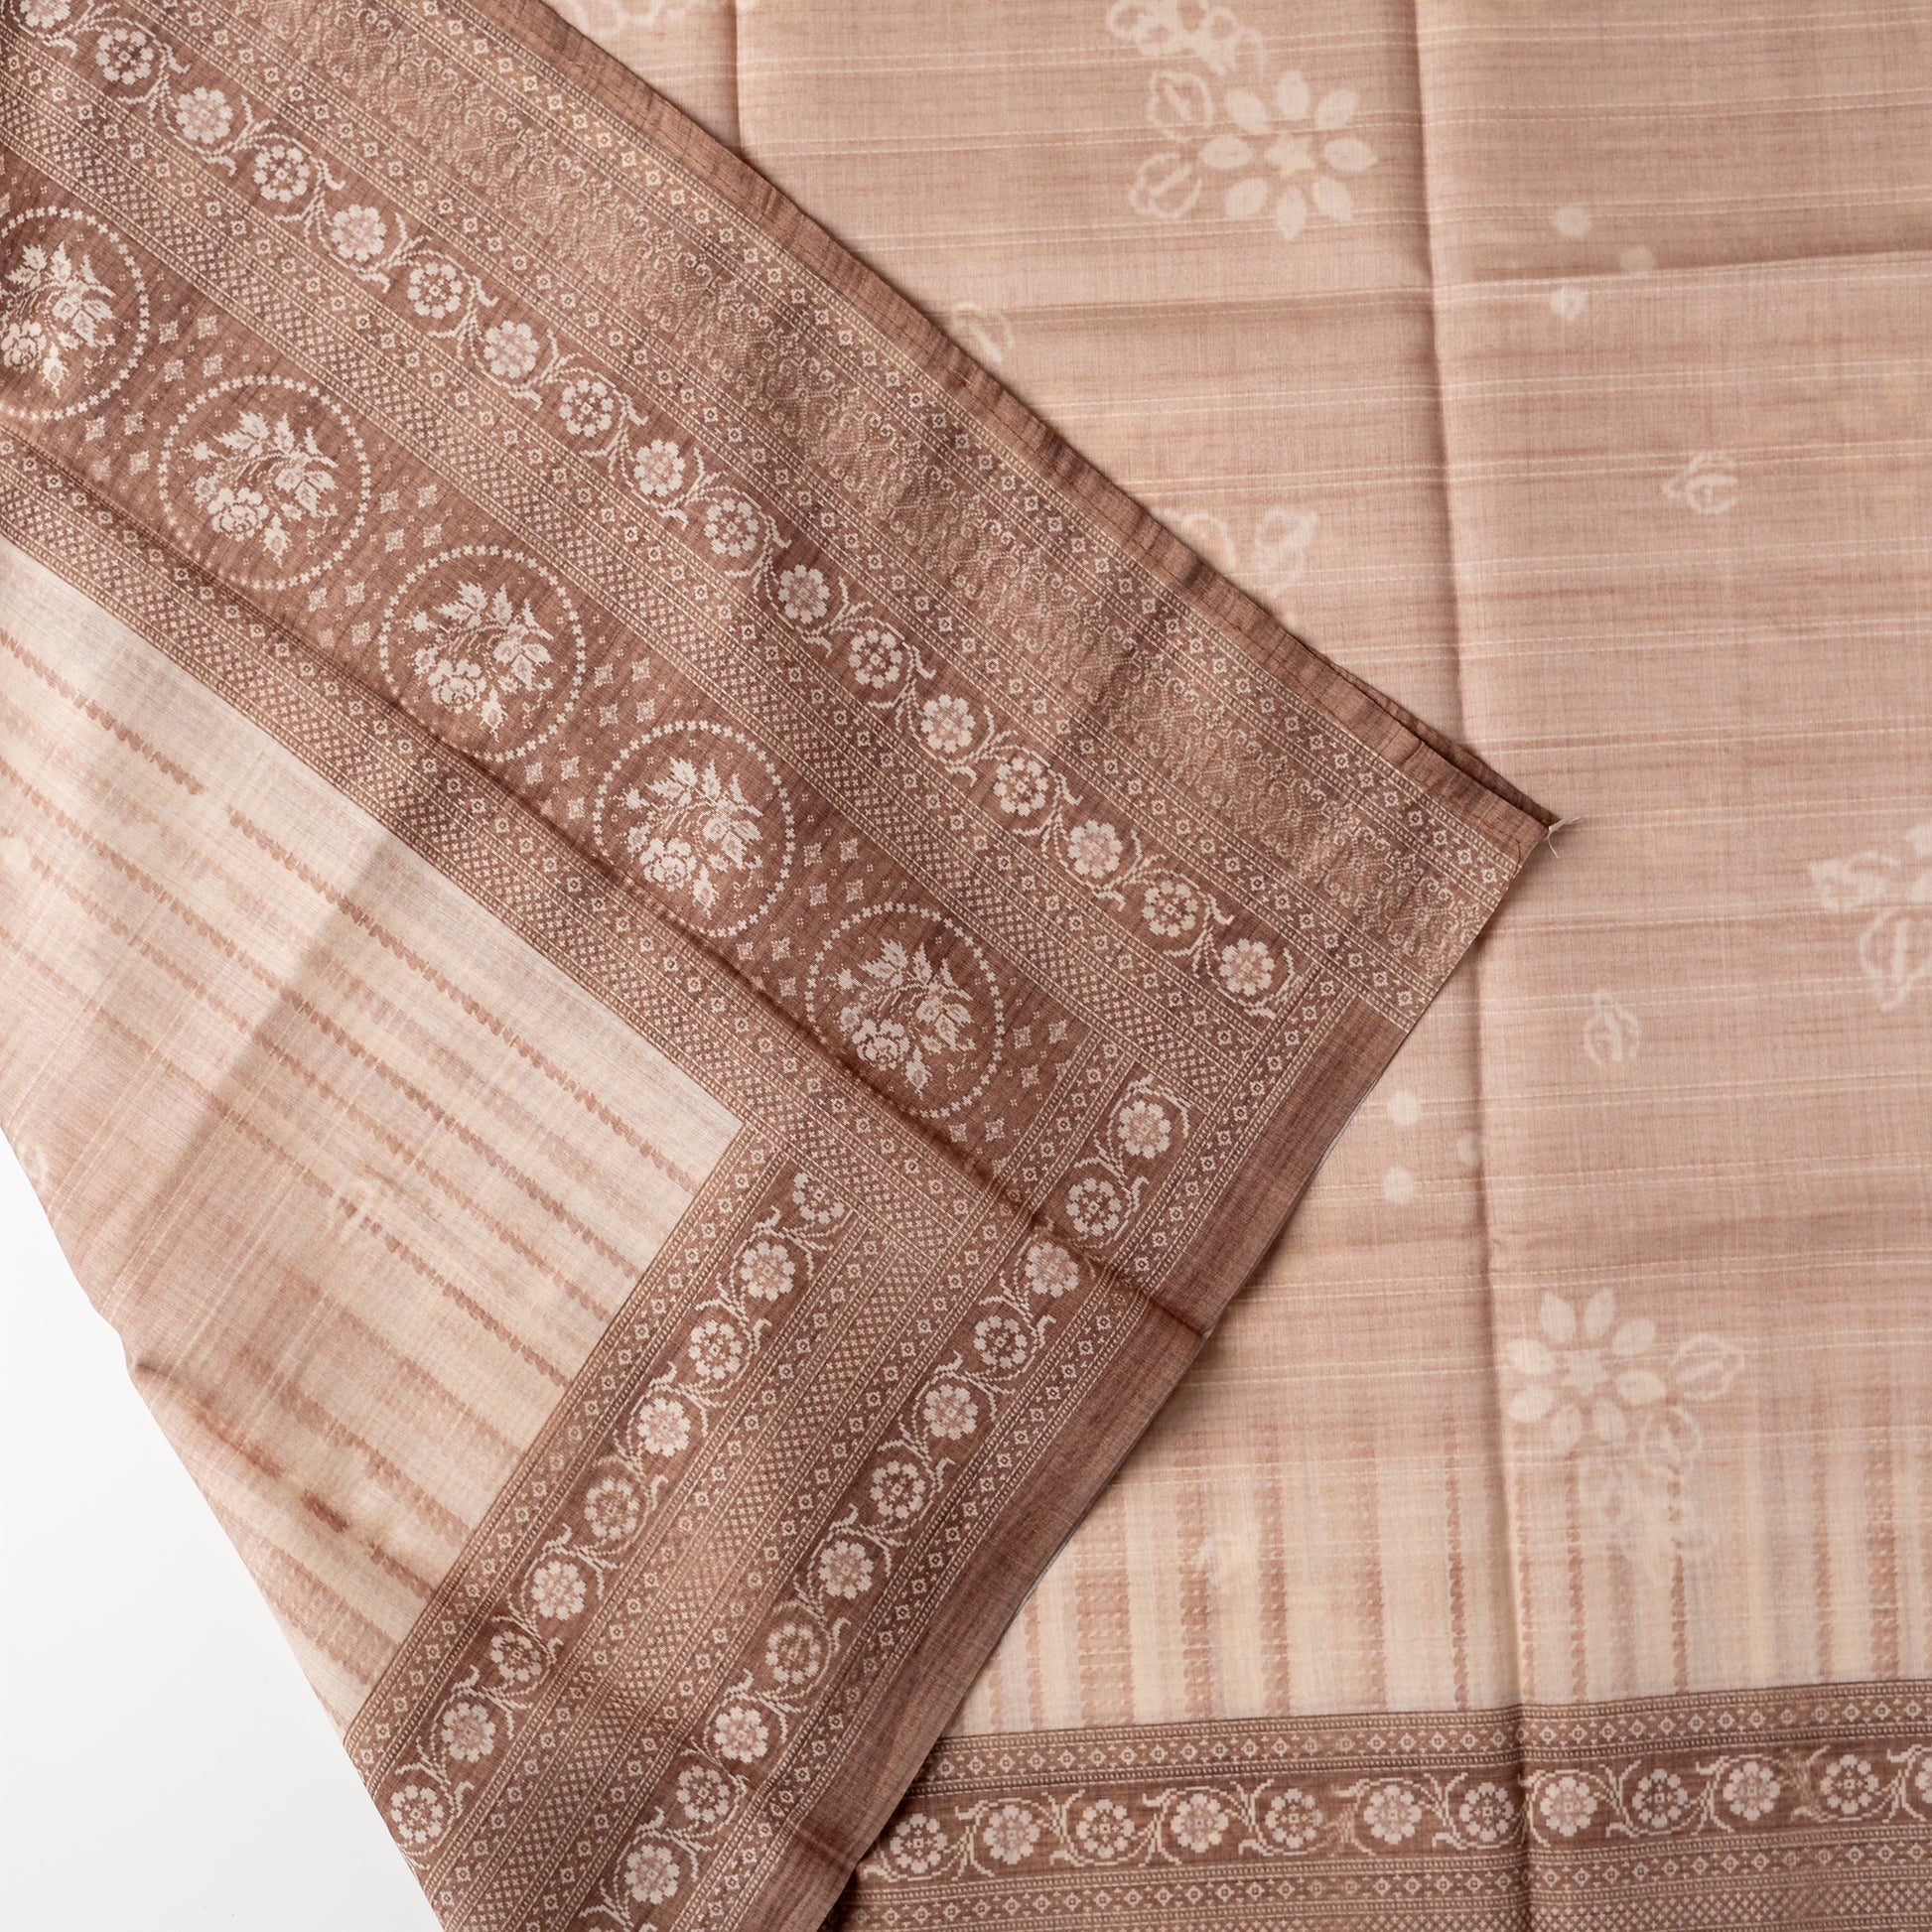  silk dupatta with beautiful digital prints in pastel brown color